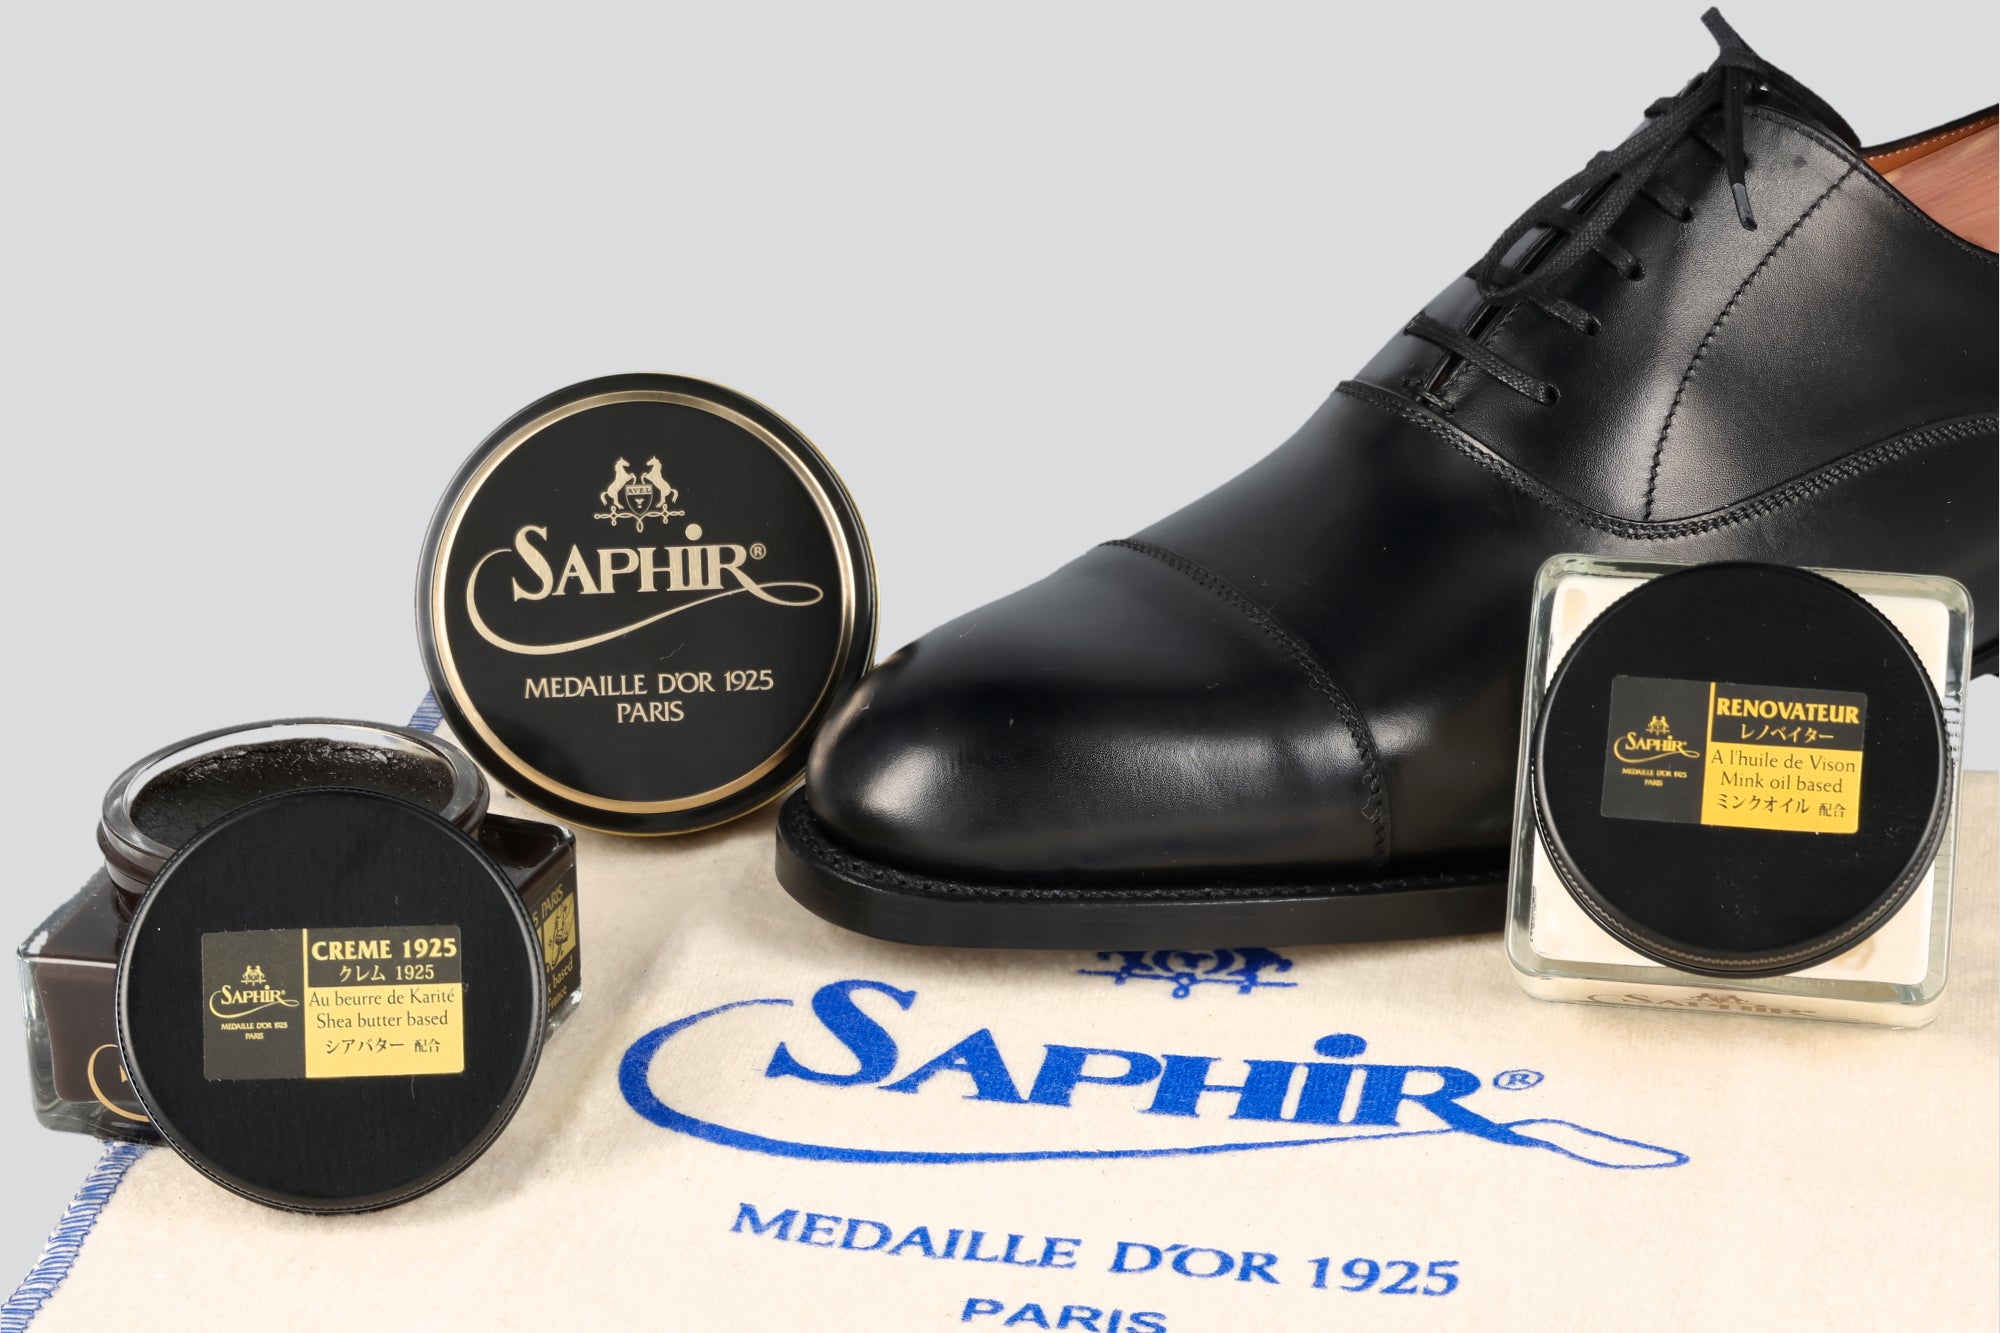 Saphir shoe polish kit with black dress shoe 